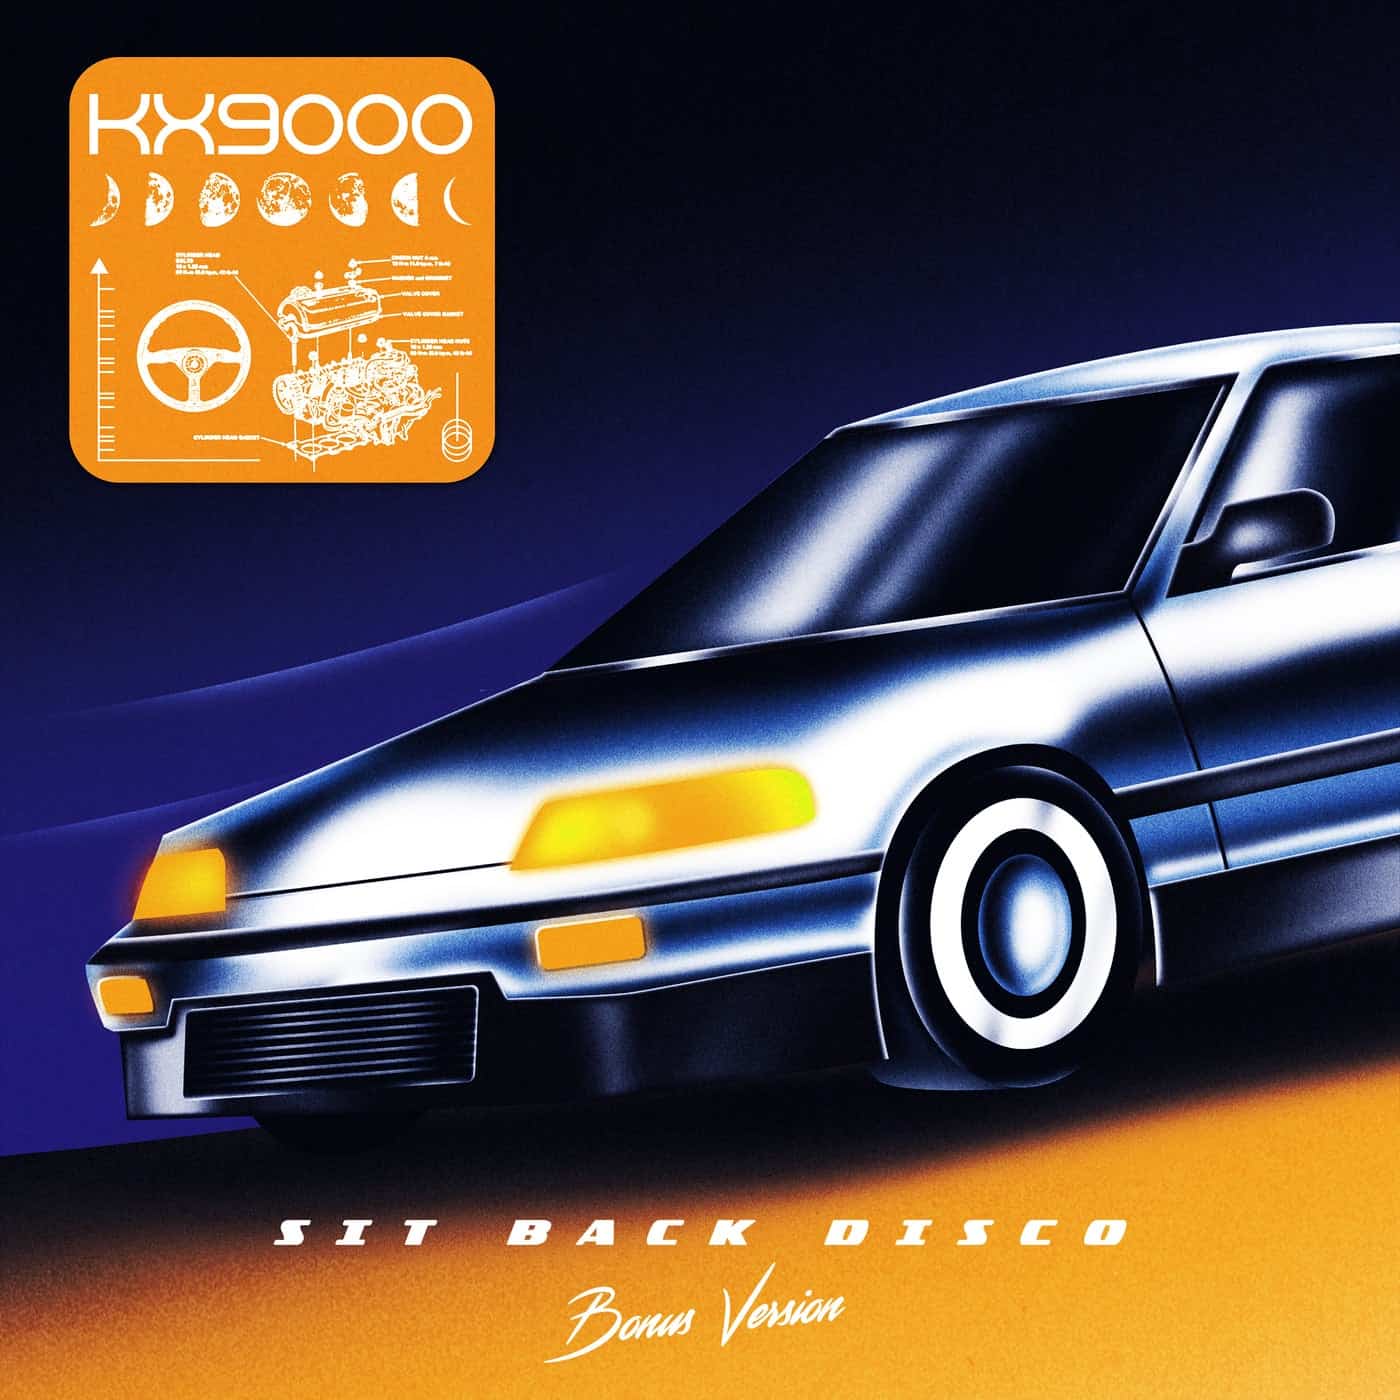 Download Kx9000 - Sit Back Disco on Electrobuzz